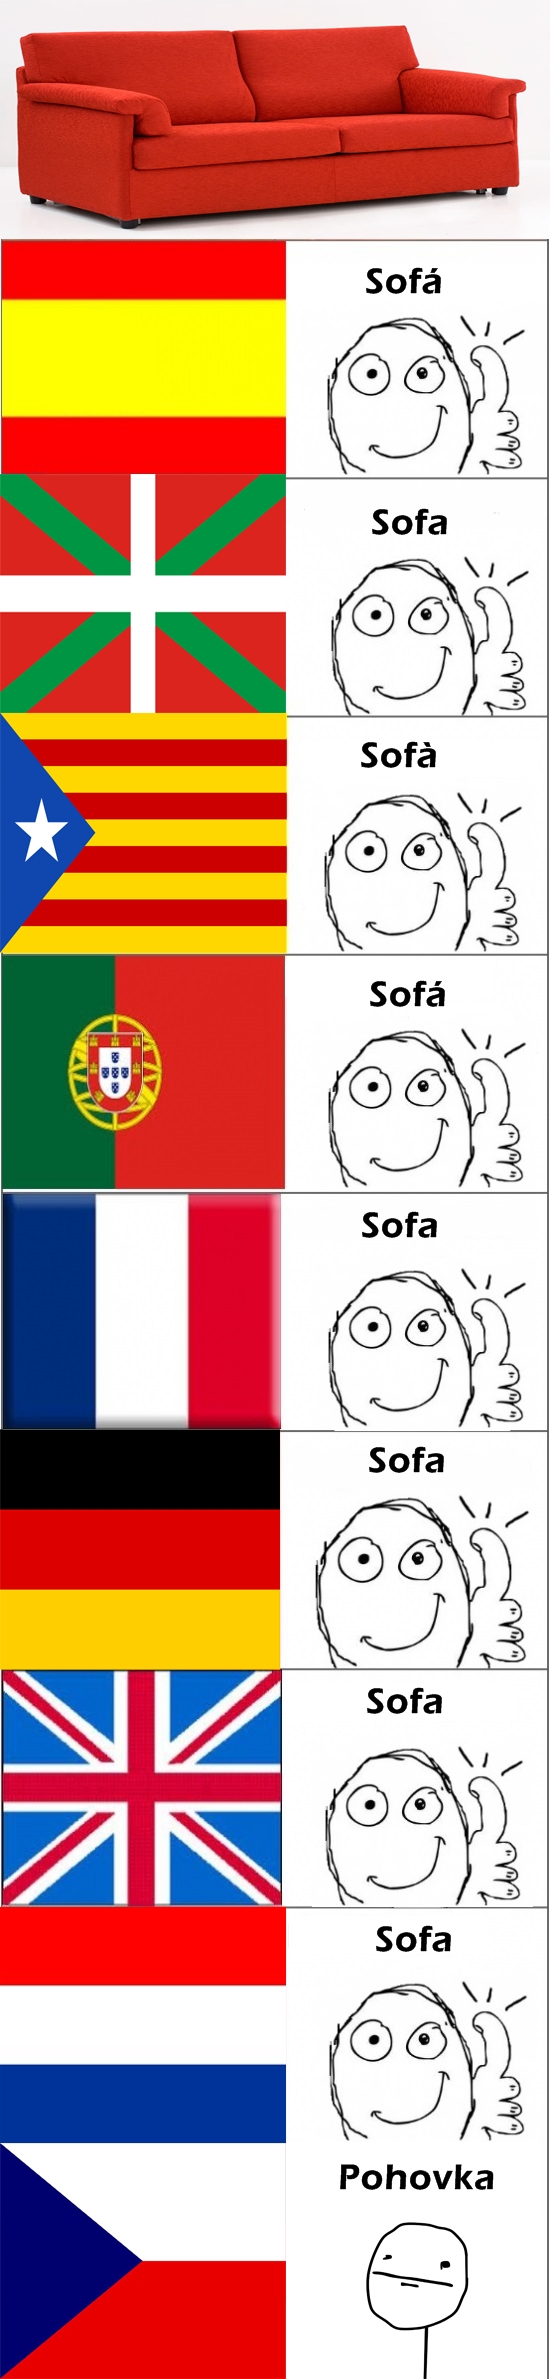 alemánia,catalunya,españa,euskadi,francia,holanda,idiomas,portugal,república checa,sofá